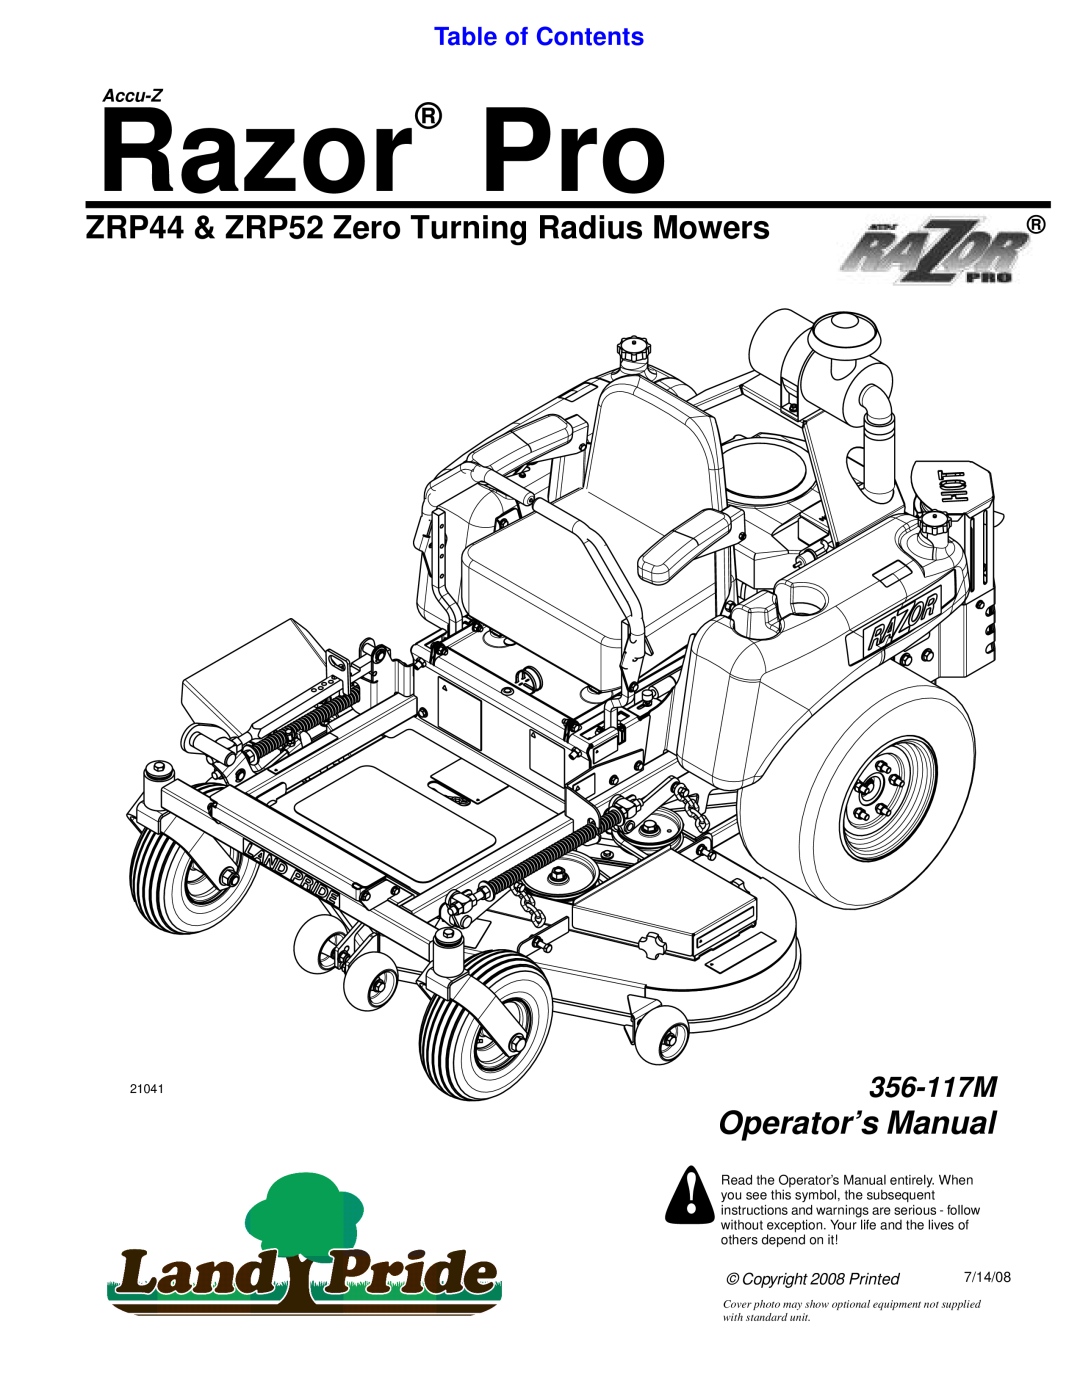 Land Pride manual Table of Contents, Accu-Z, Razor Pro, ZRP44 & ZRP52 Zero Turning Radius Mowers, Operator’s Manual 